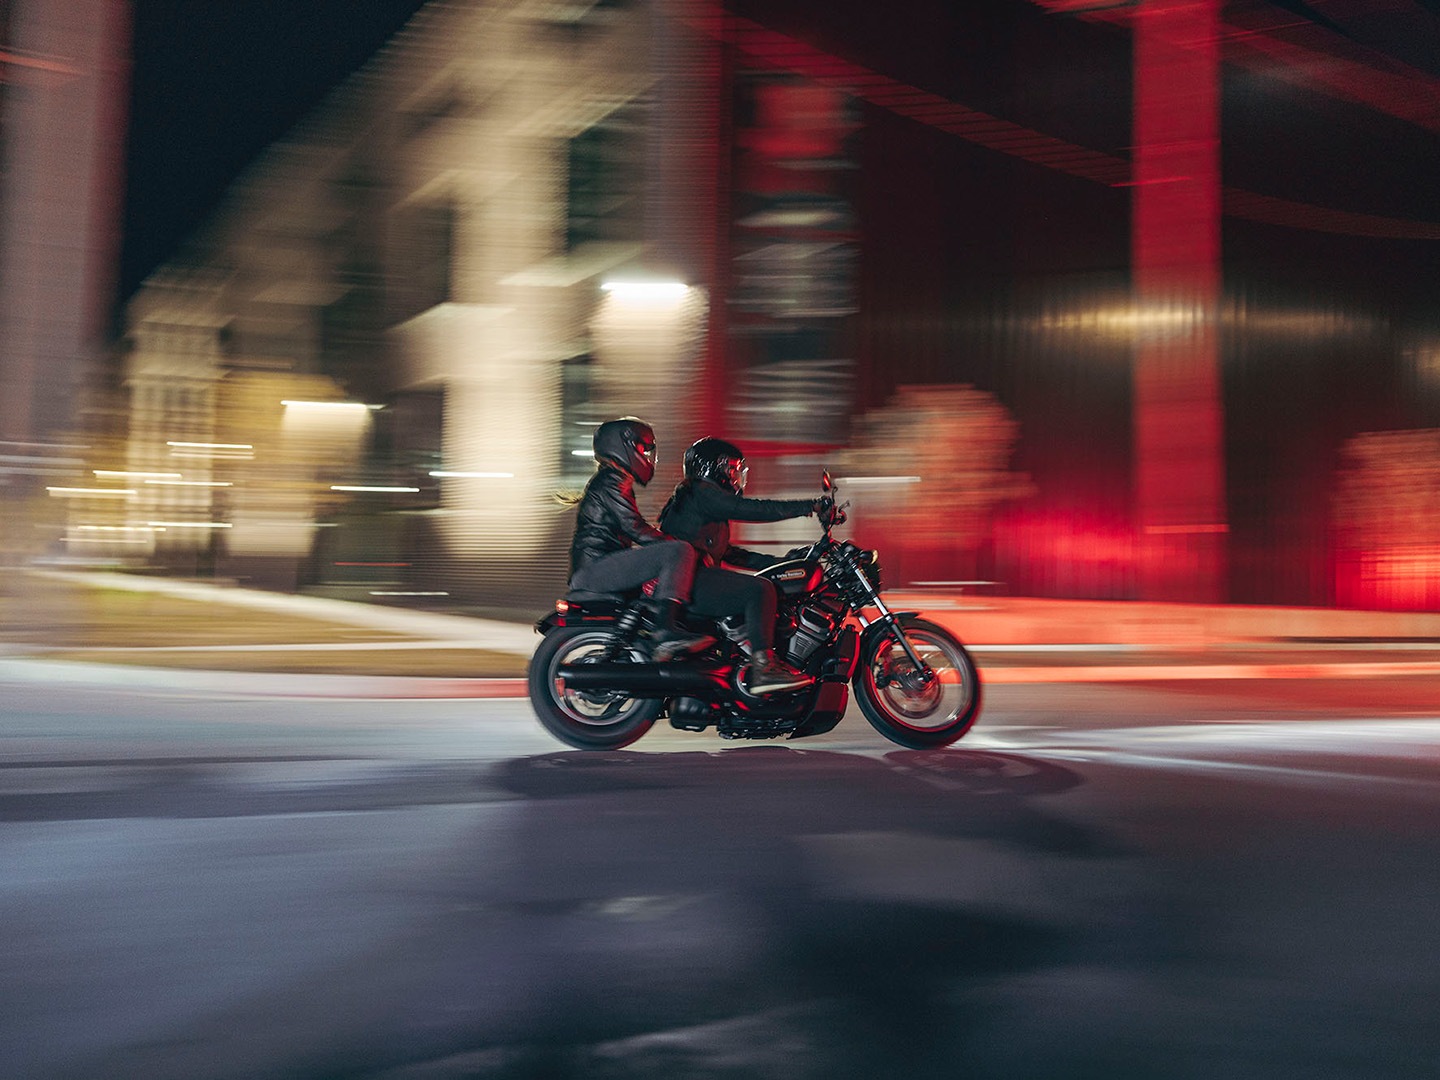 2023 Harley-Davidson Nightster® Special in Mobile, Alabama - Photo 7